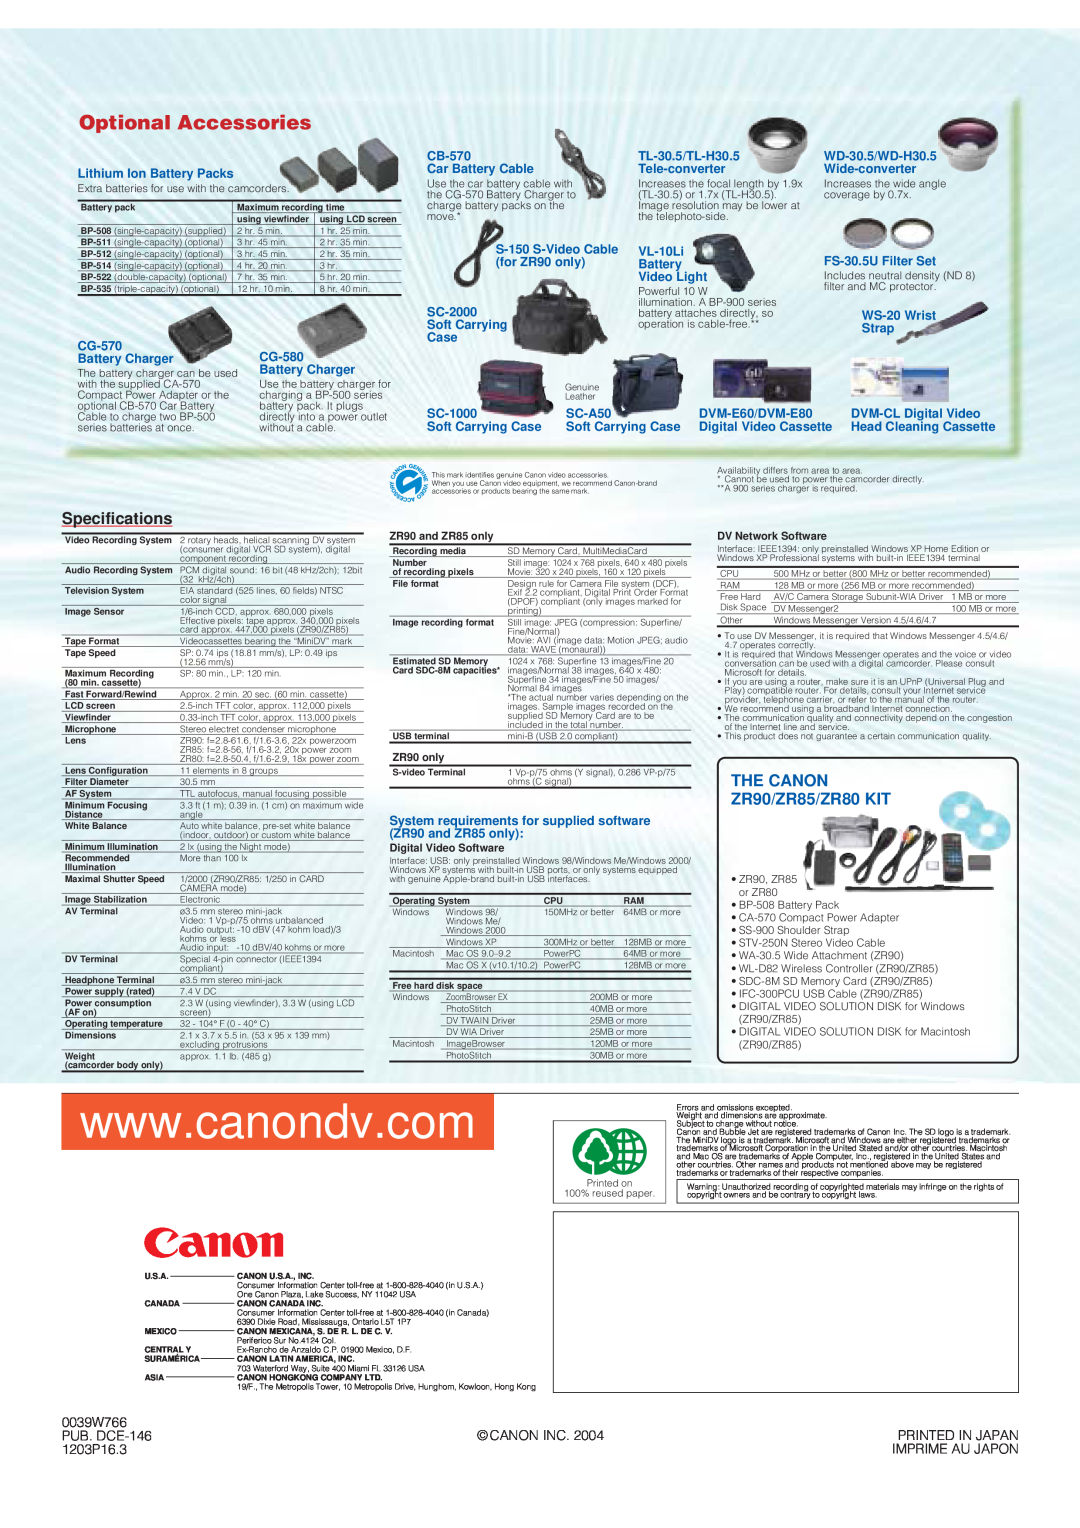 Canon Optional Accessories, Specifications, THE CANON ZR90/ZR85/ZR80 KIT, 0039W766, Canon Inc, PUB. DCE-146, 1203P16.3 